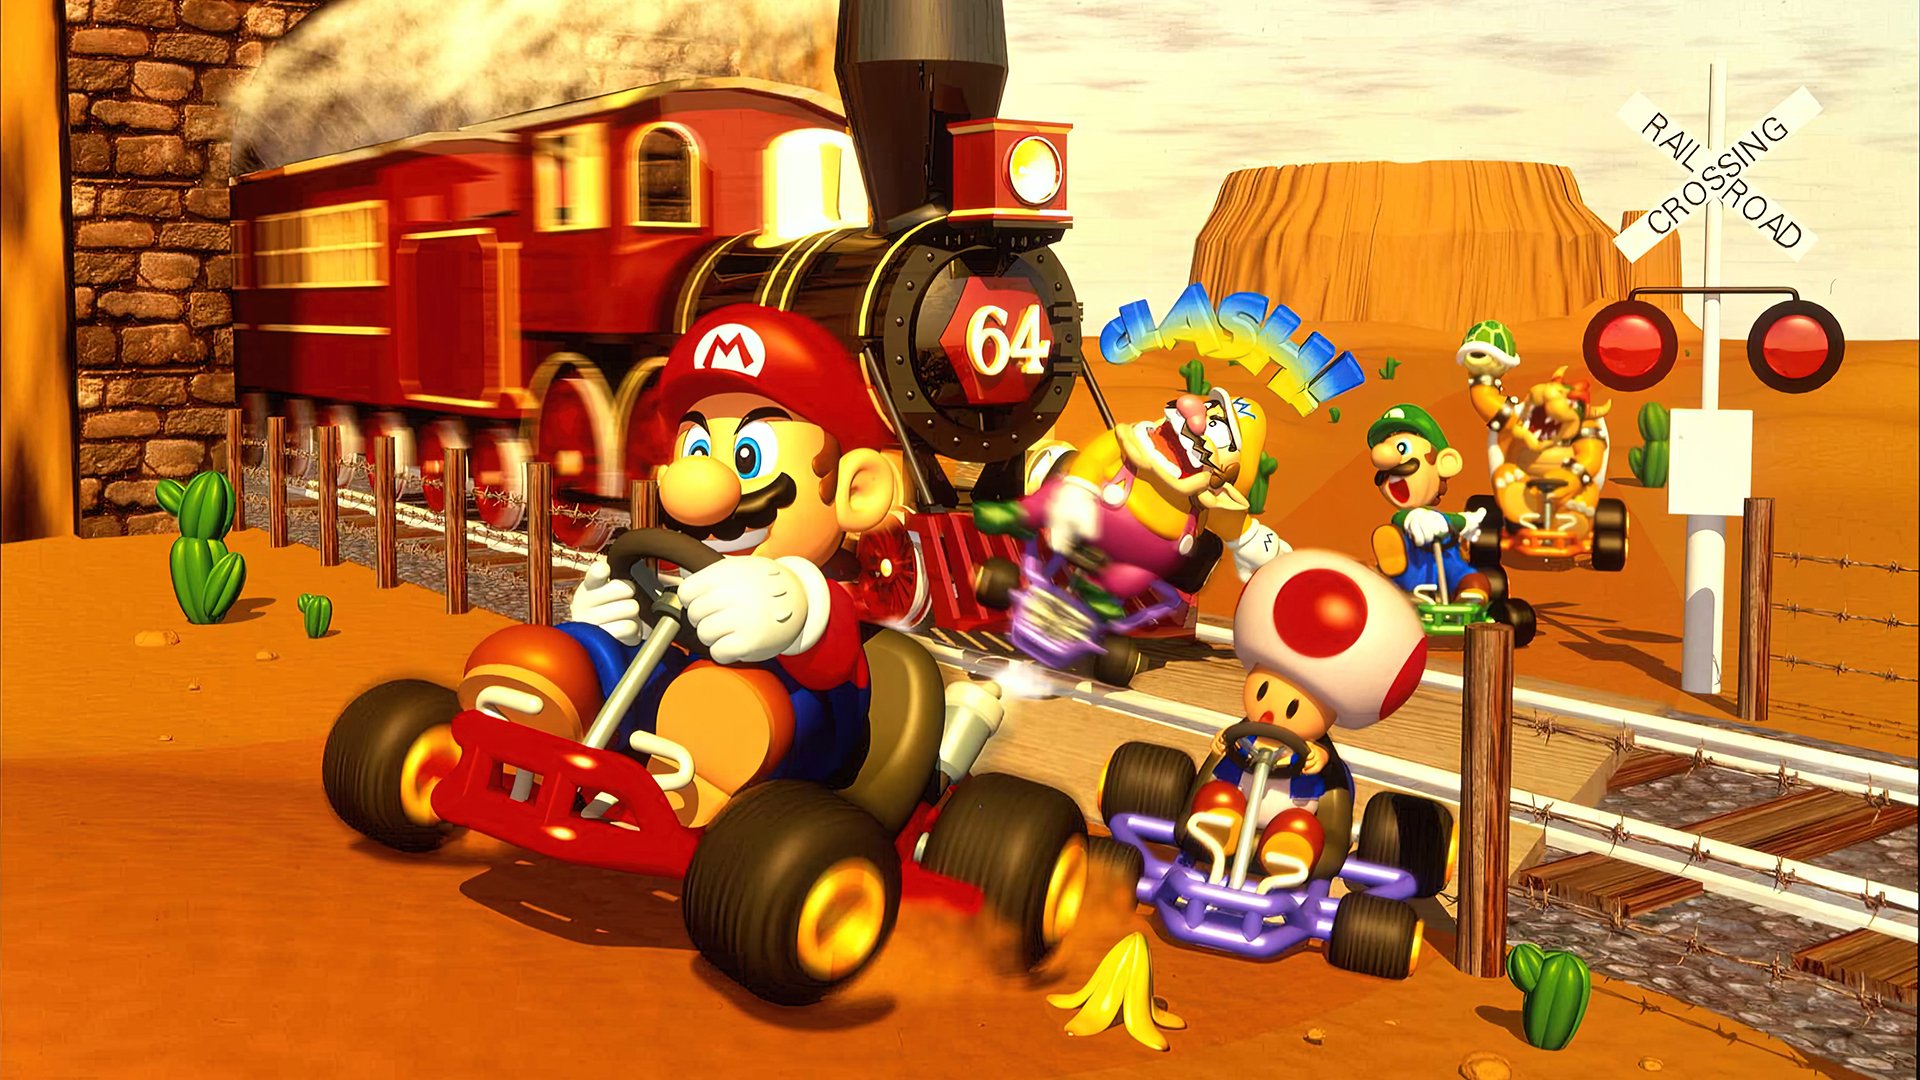 Mario And Luigi Go Head To Head In Mario Kart Tour's New Update